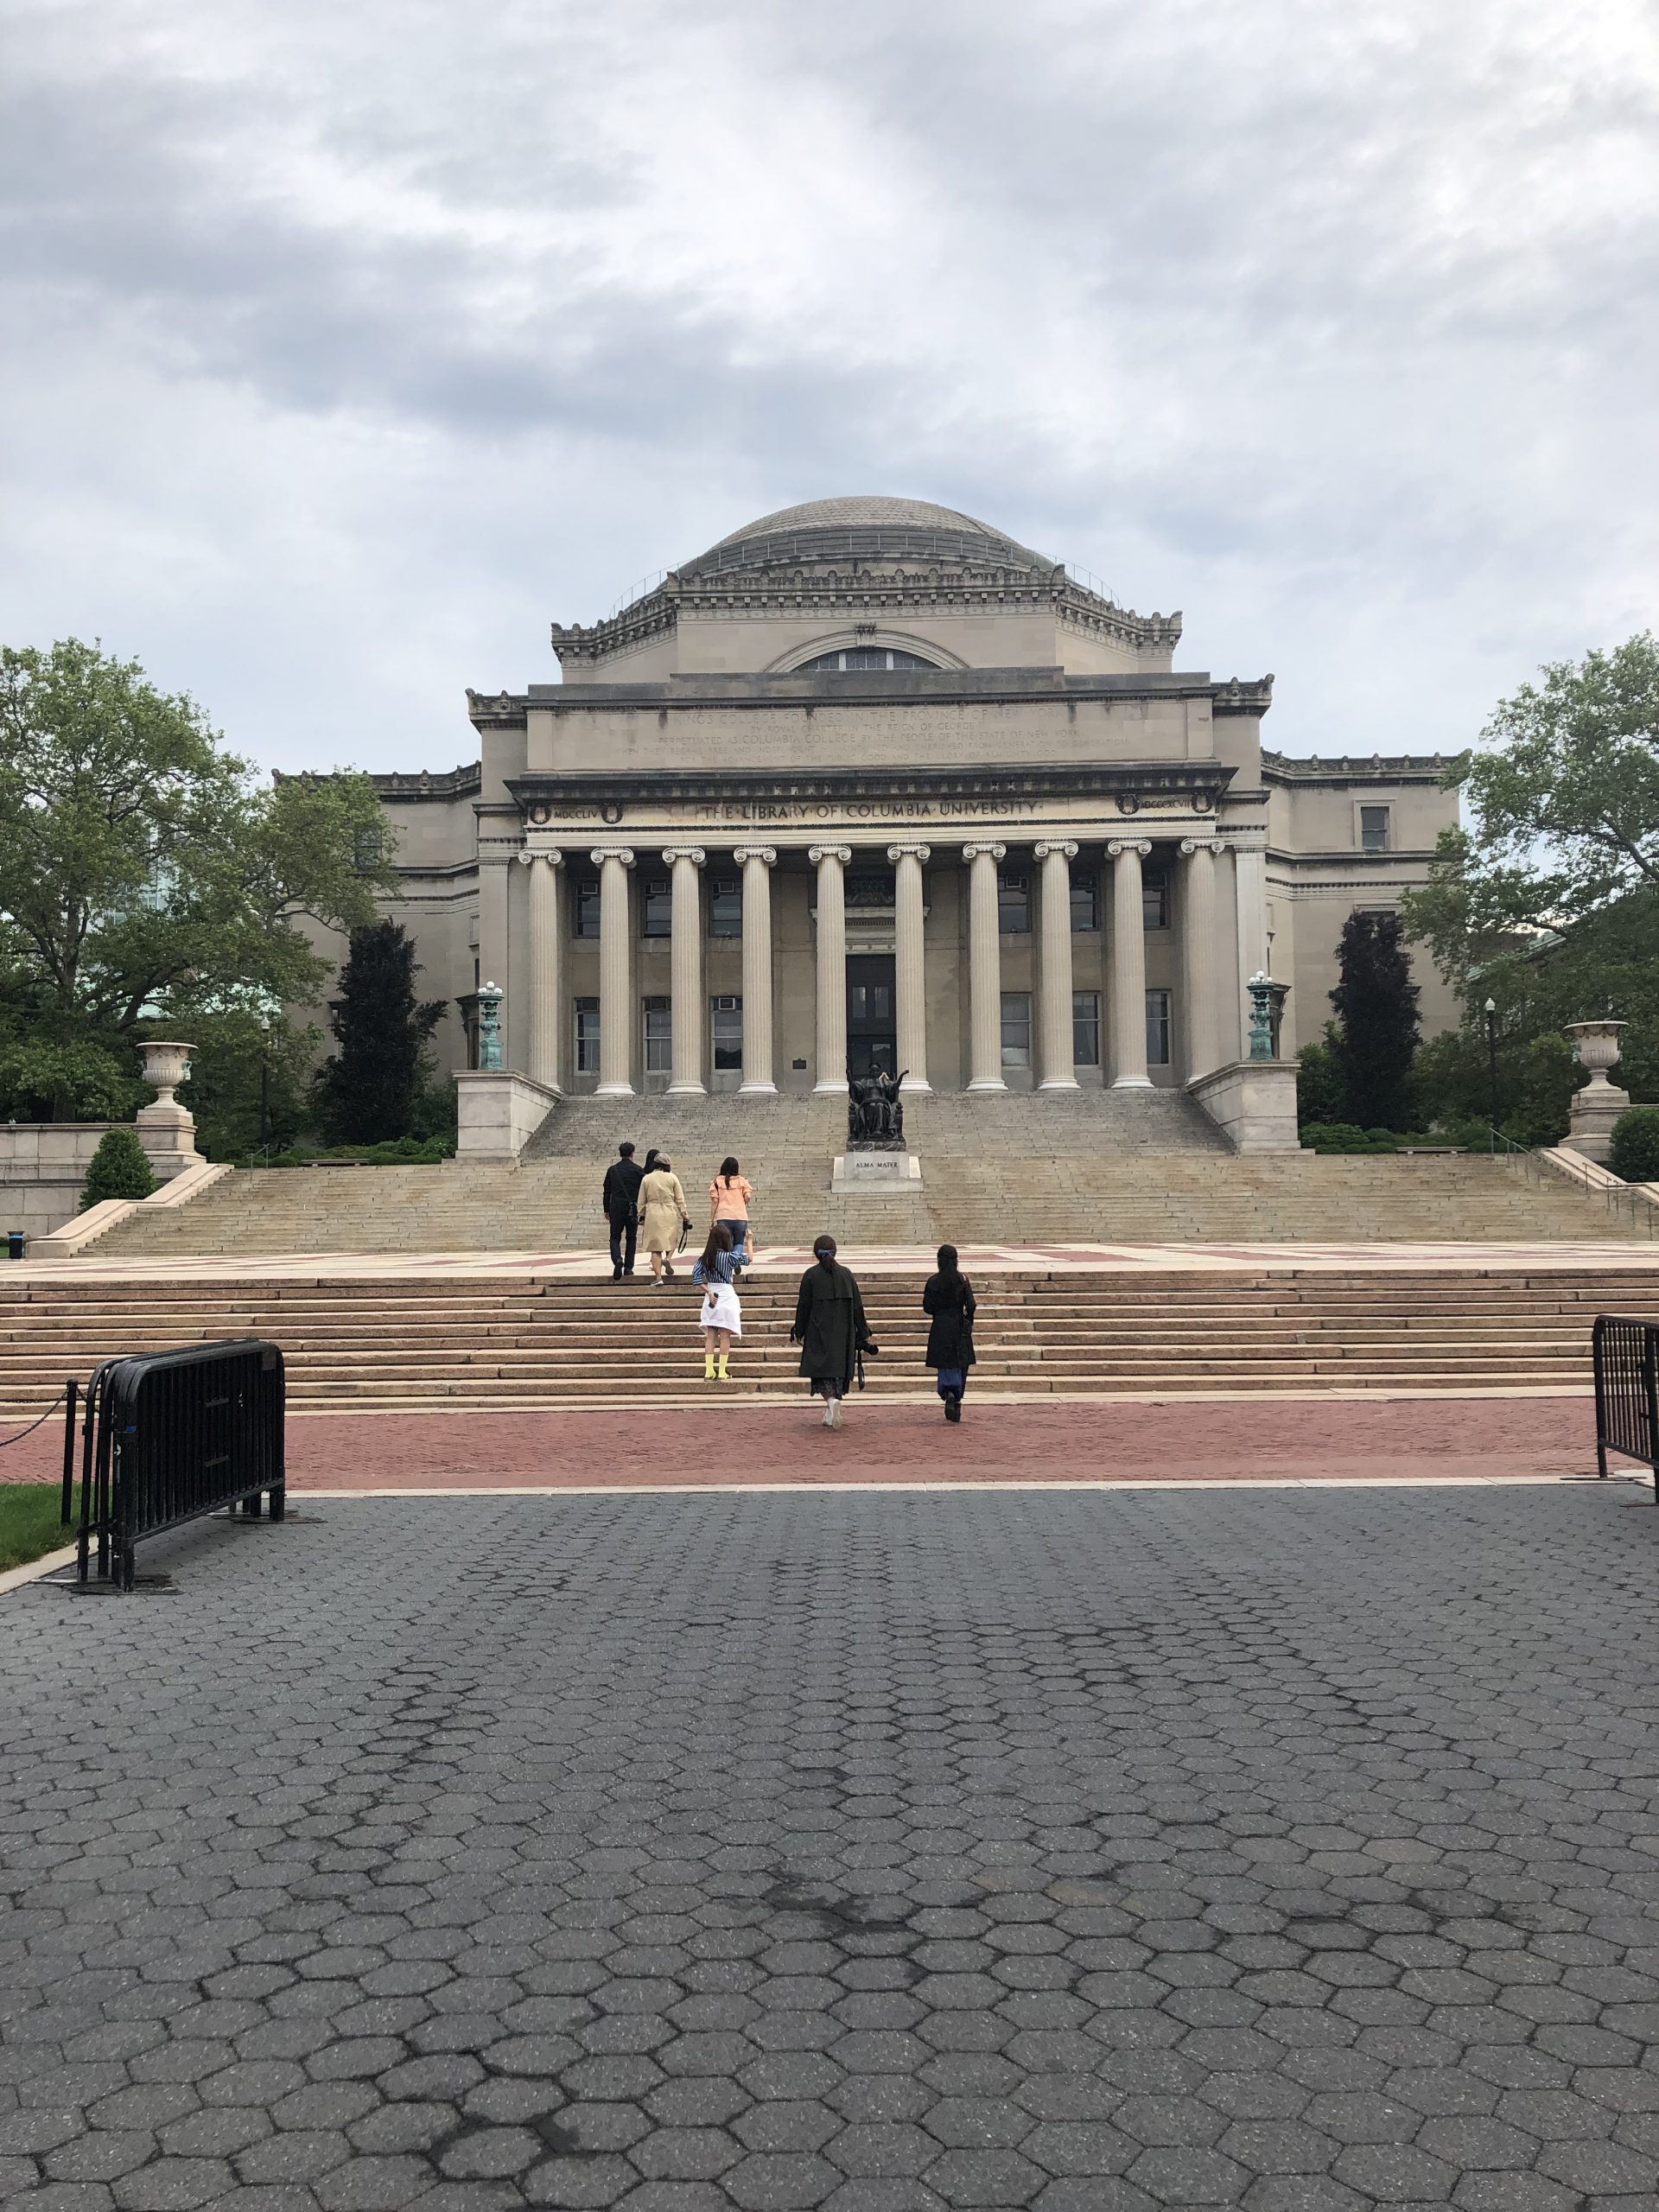 Université Columbia